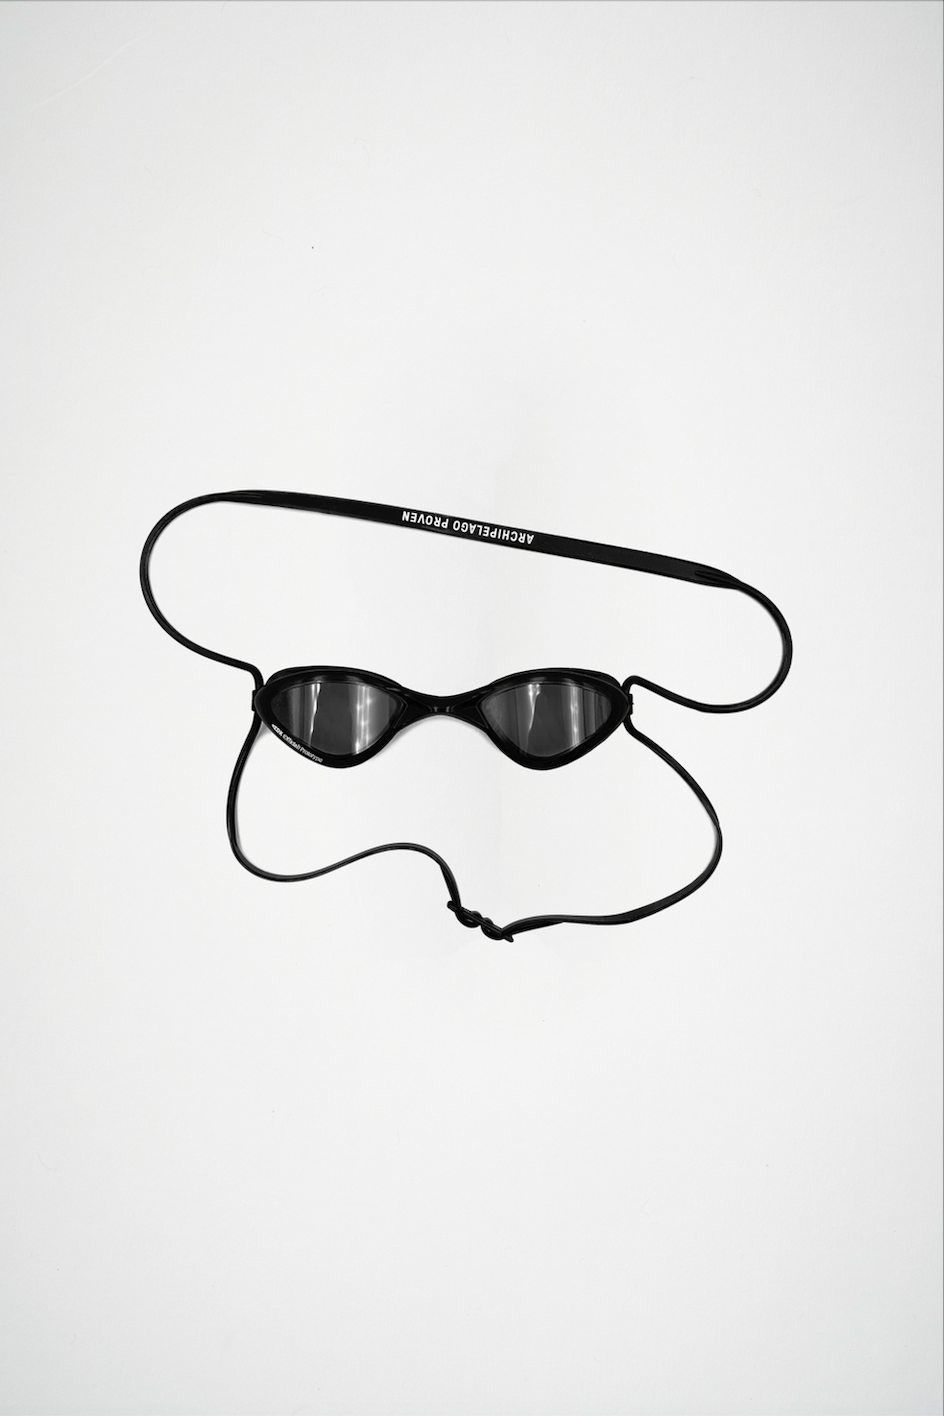 Product photo of ARK Swim Goggles LTD Black